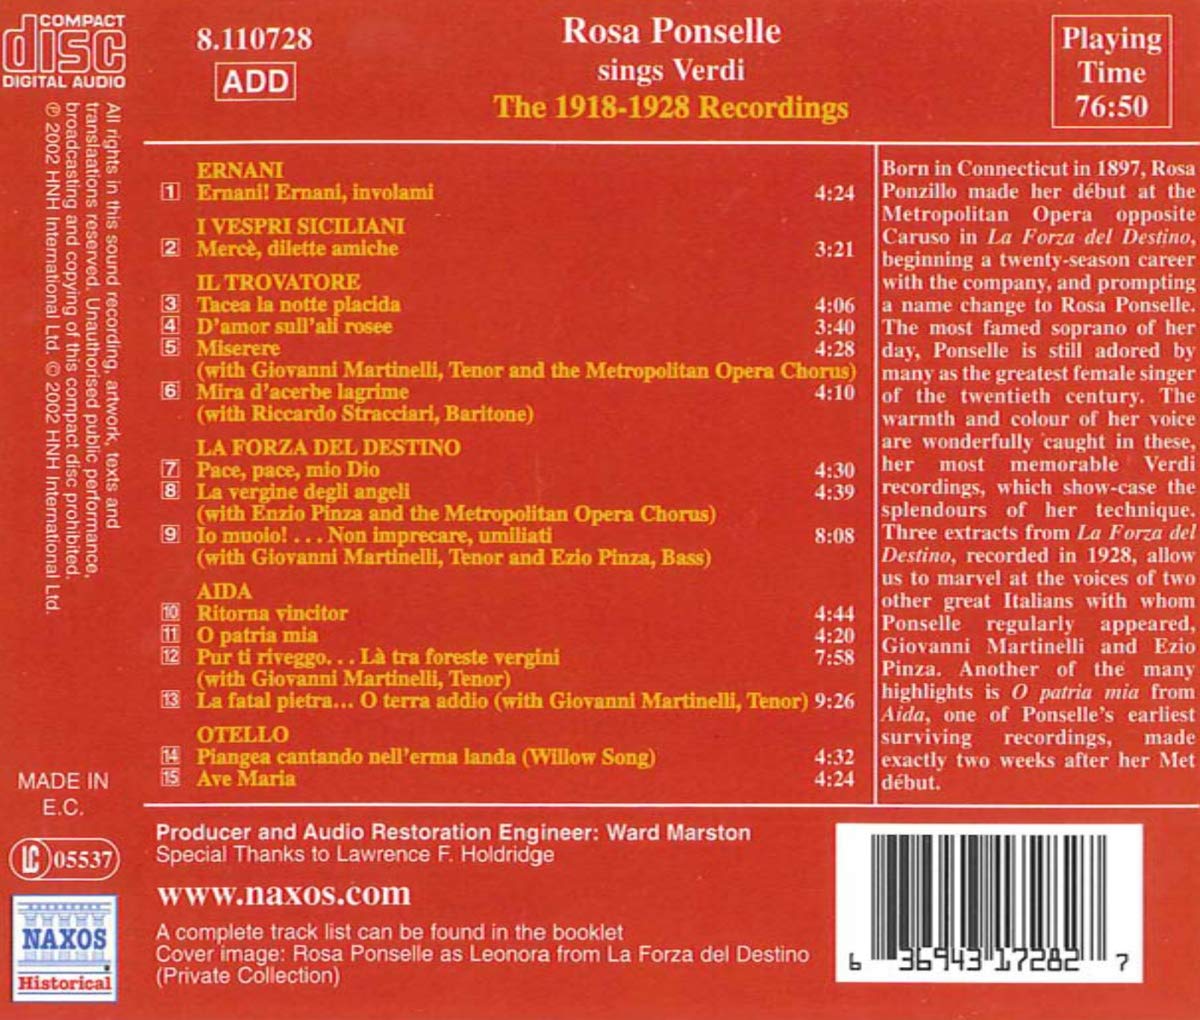 Rosa Ponselle - Verdi Arias - slide-1